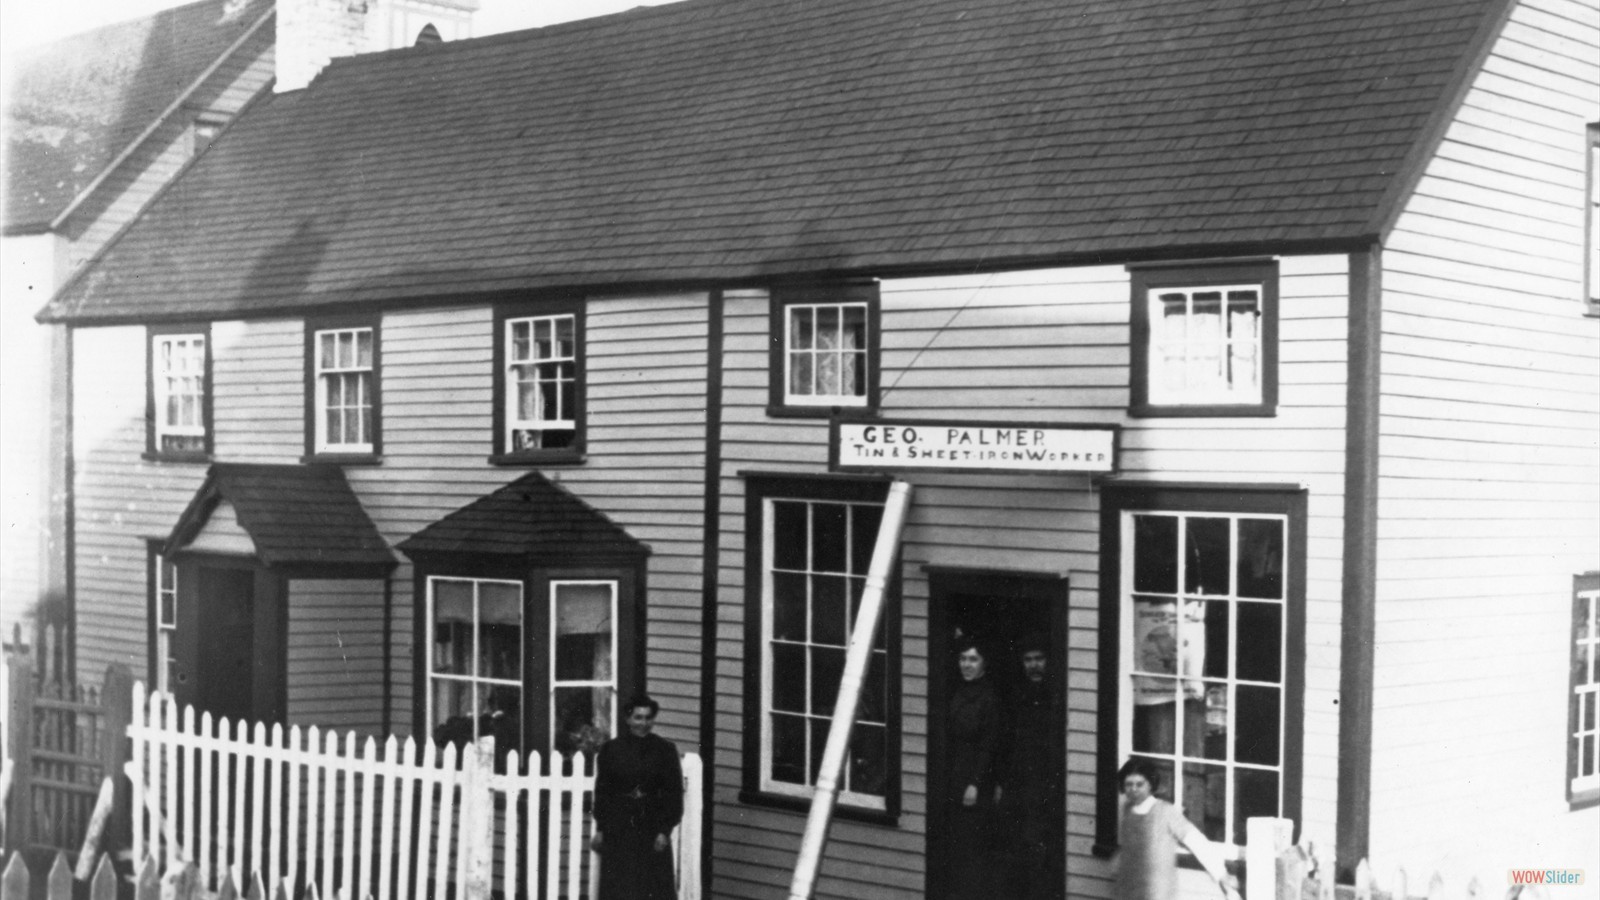 George Palmer tin and sheet metal shop on Church Road, circa 1910